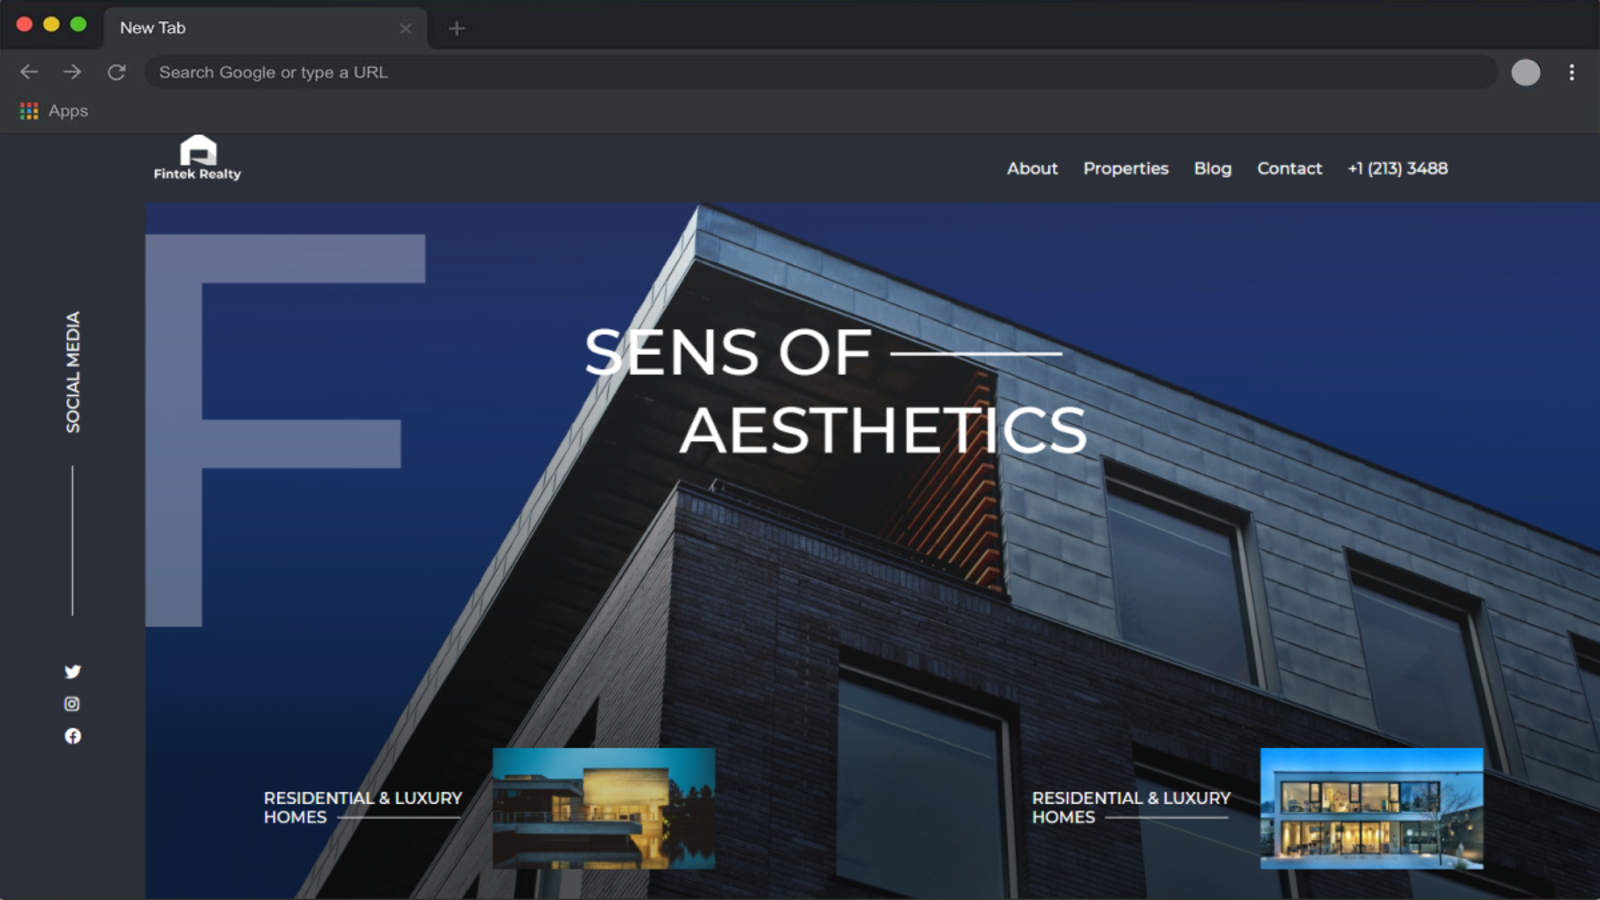 Fintek Realty website showcase in browser